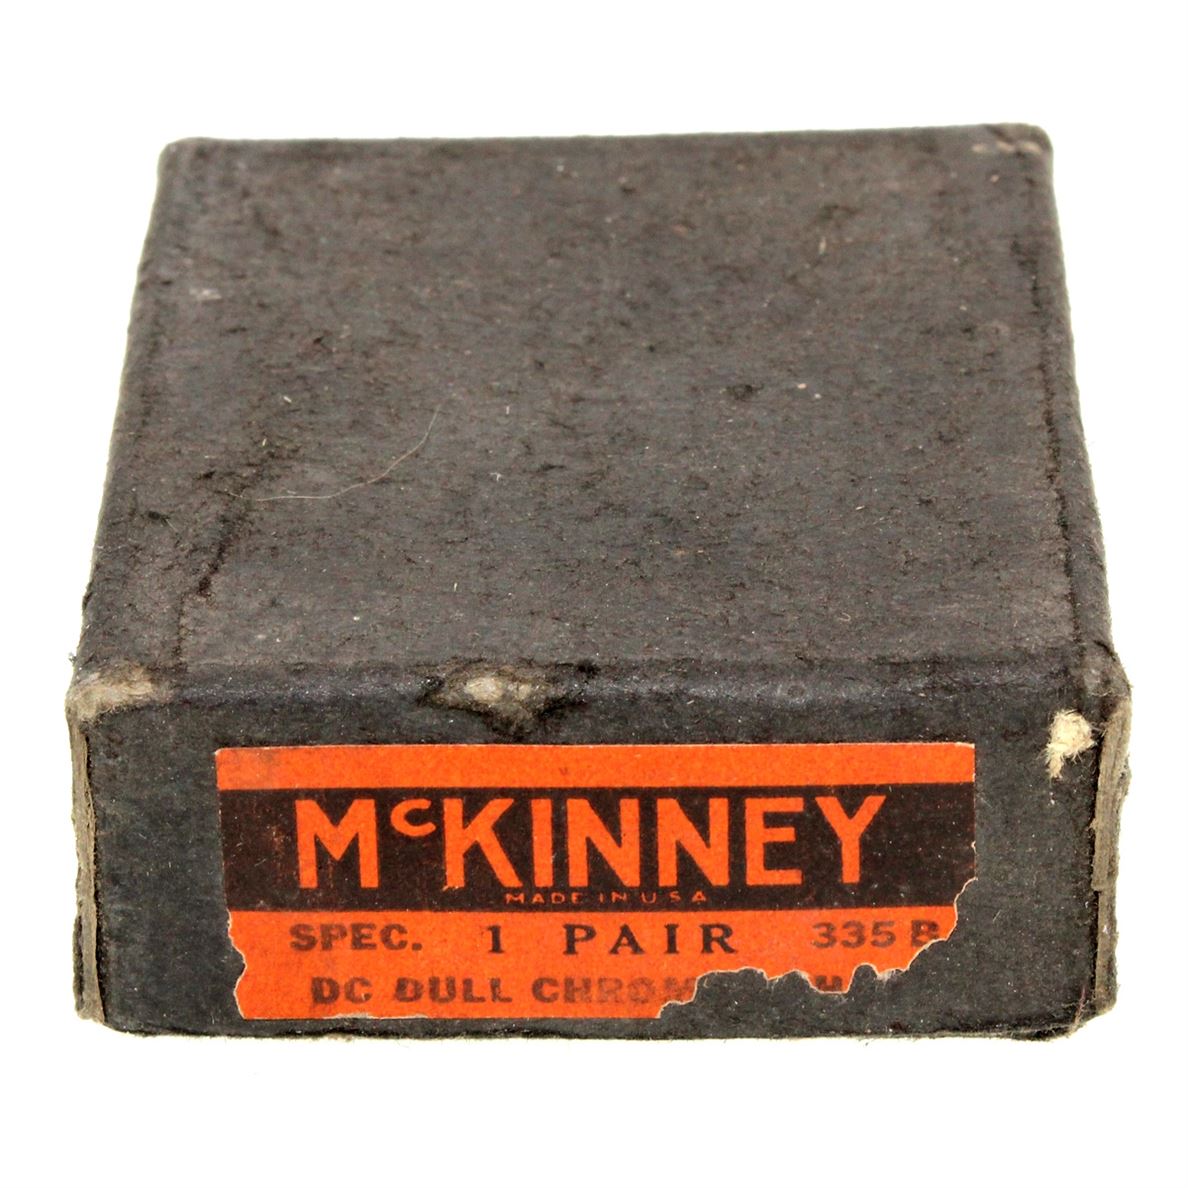 McKinney 2 1/4" x 2 1/4" Olive Knuckle Cabinet Hinges Left-Hand 2 Pack 335B-LH